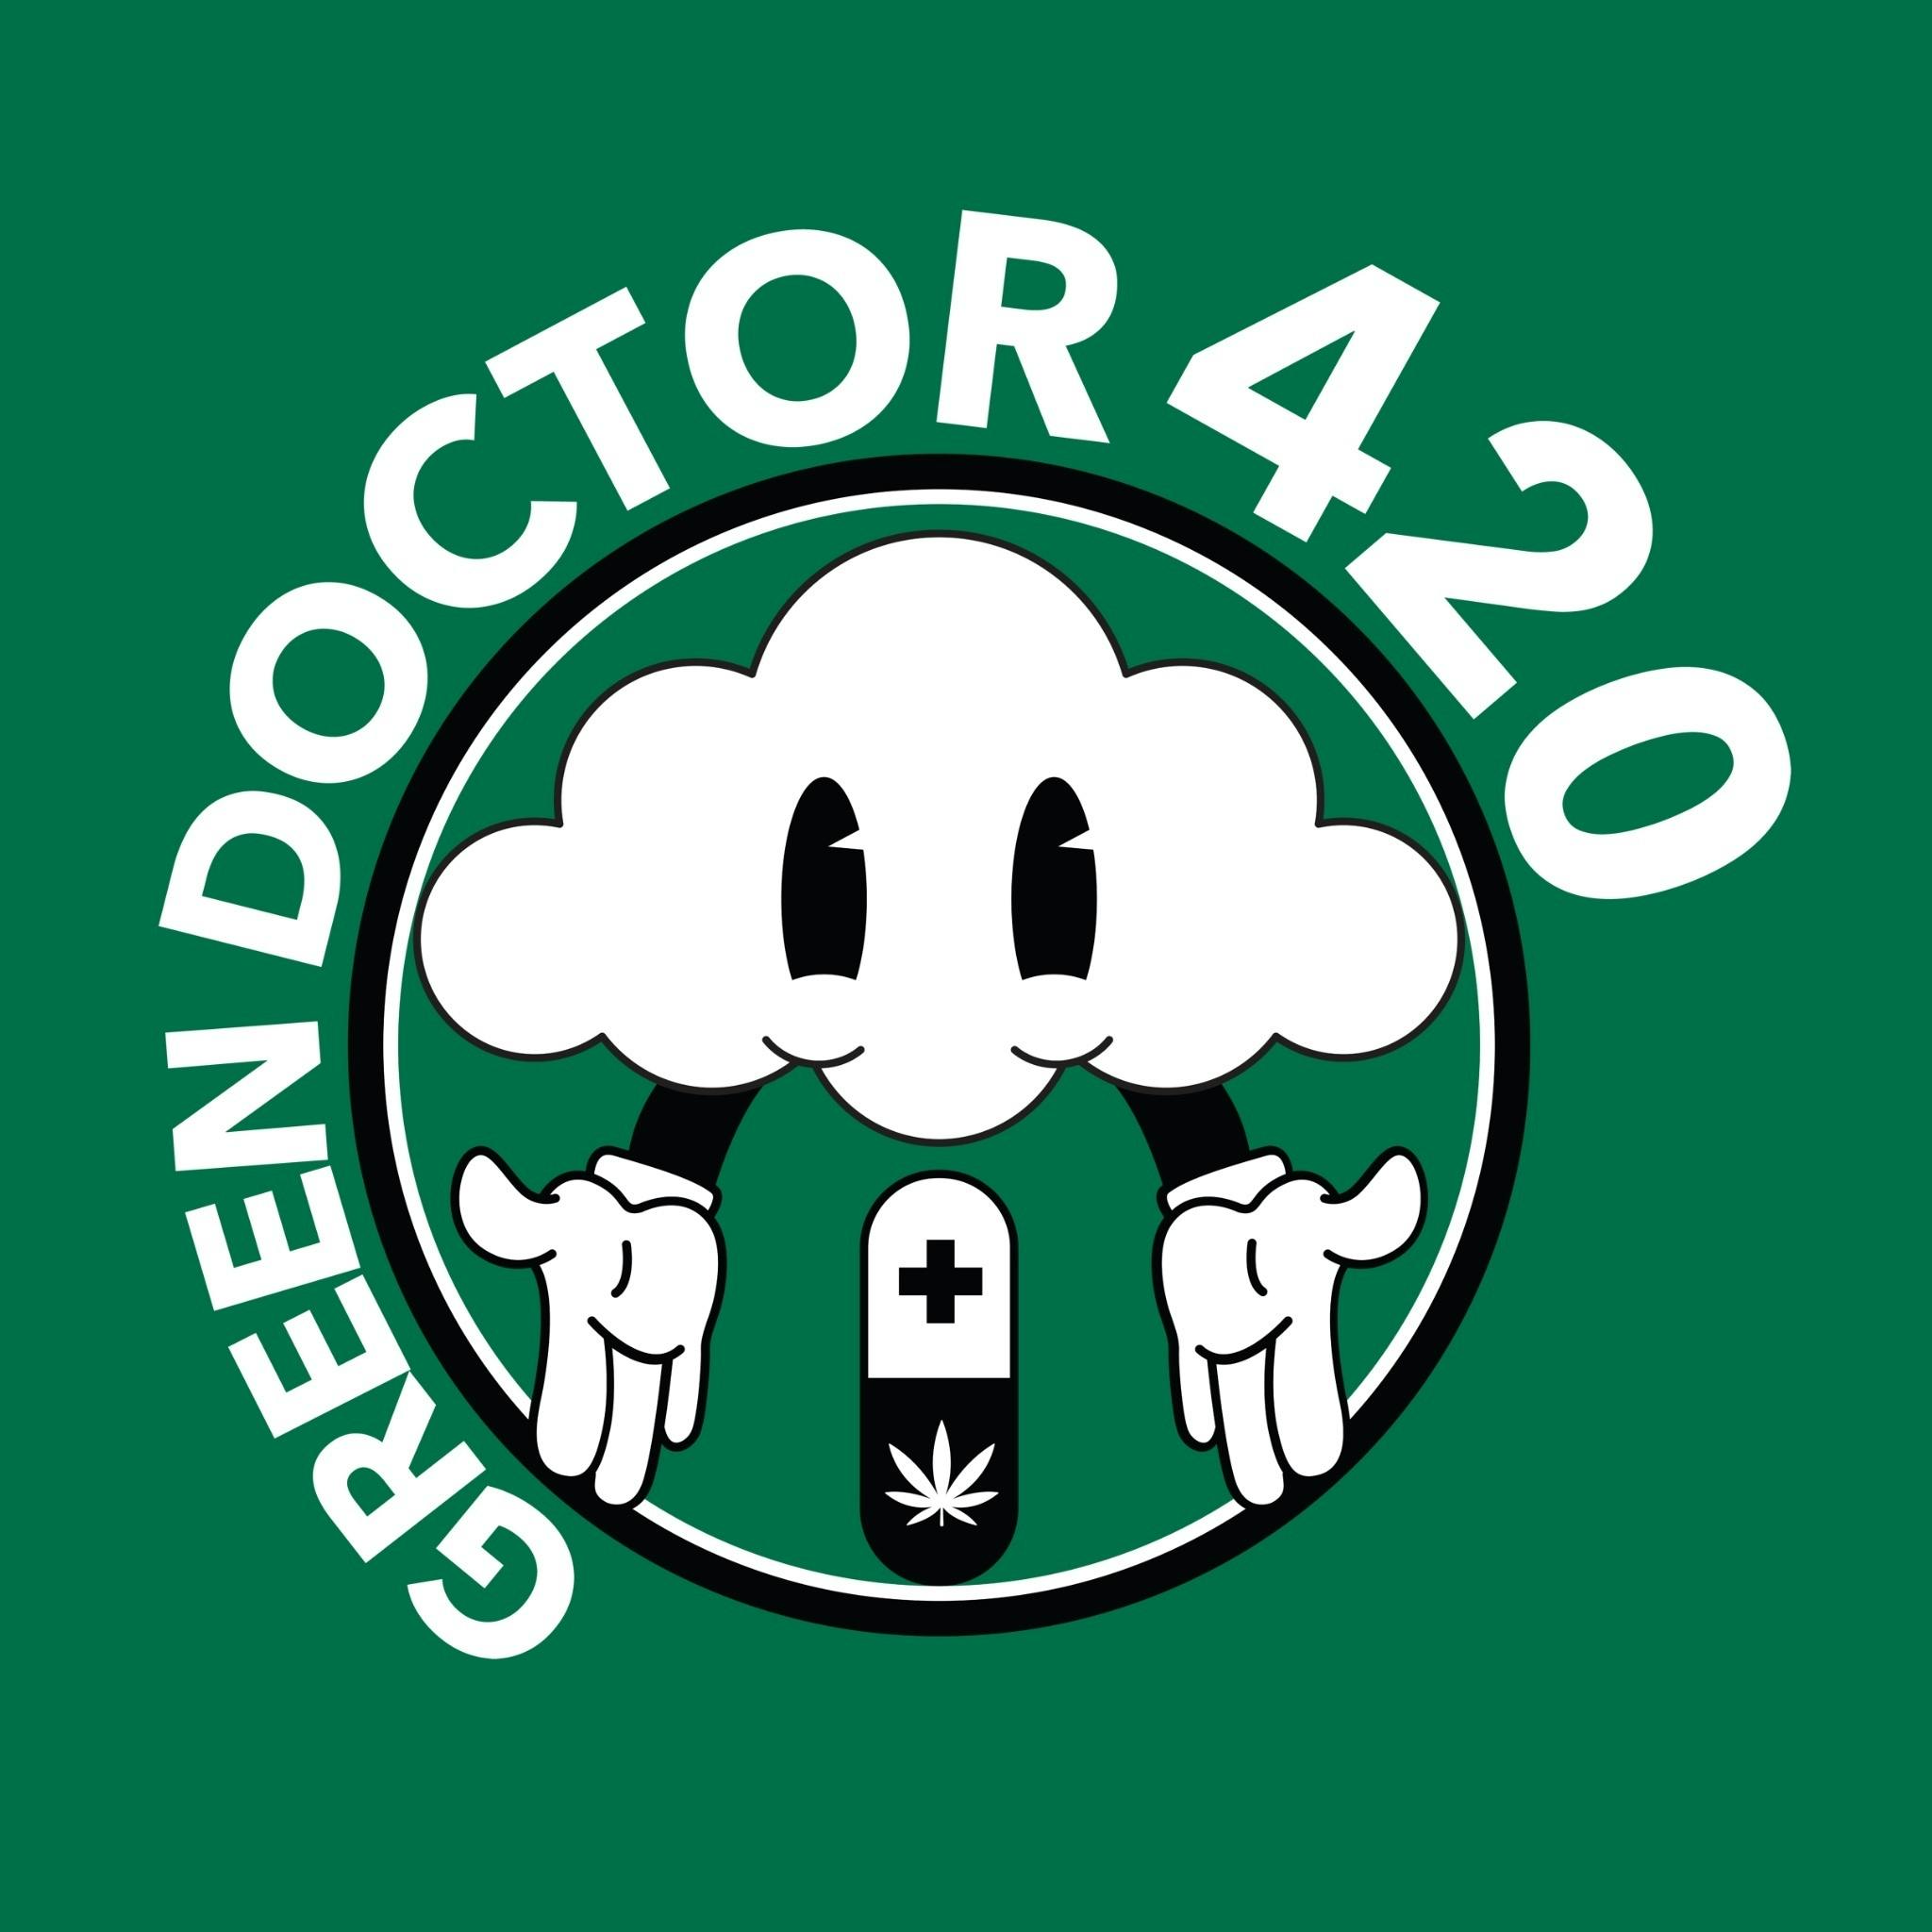 Green Doctor 420 logo